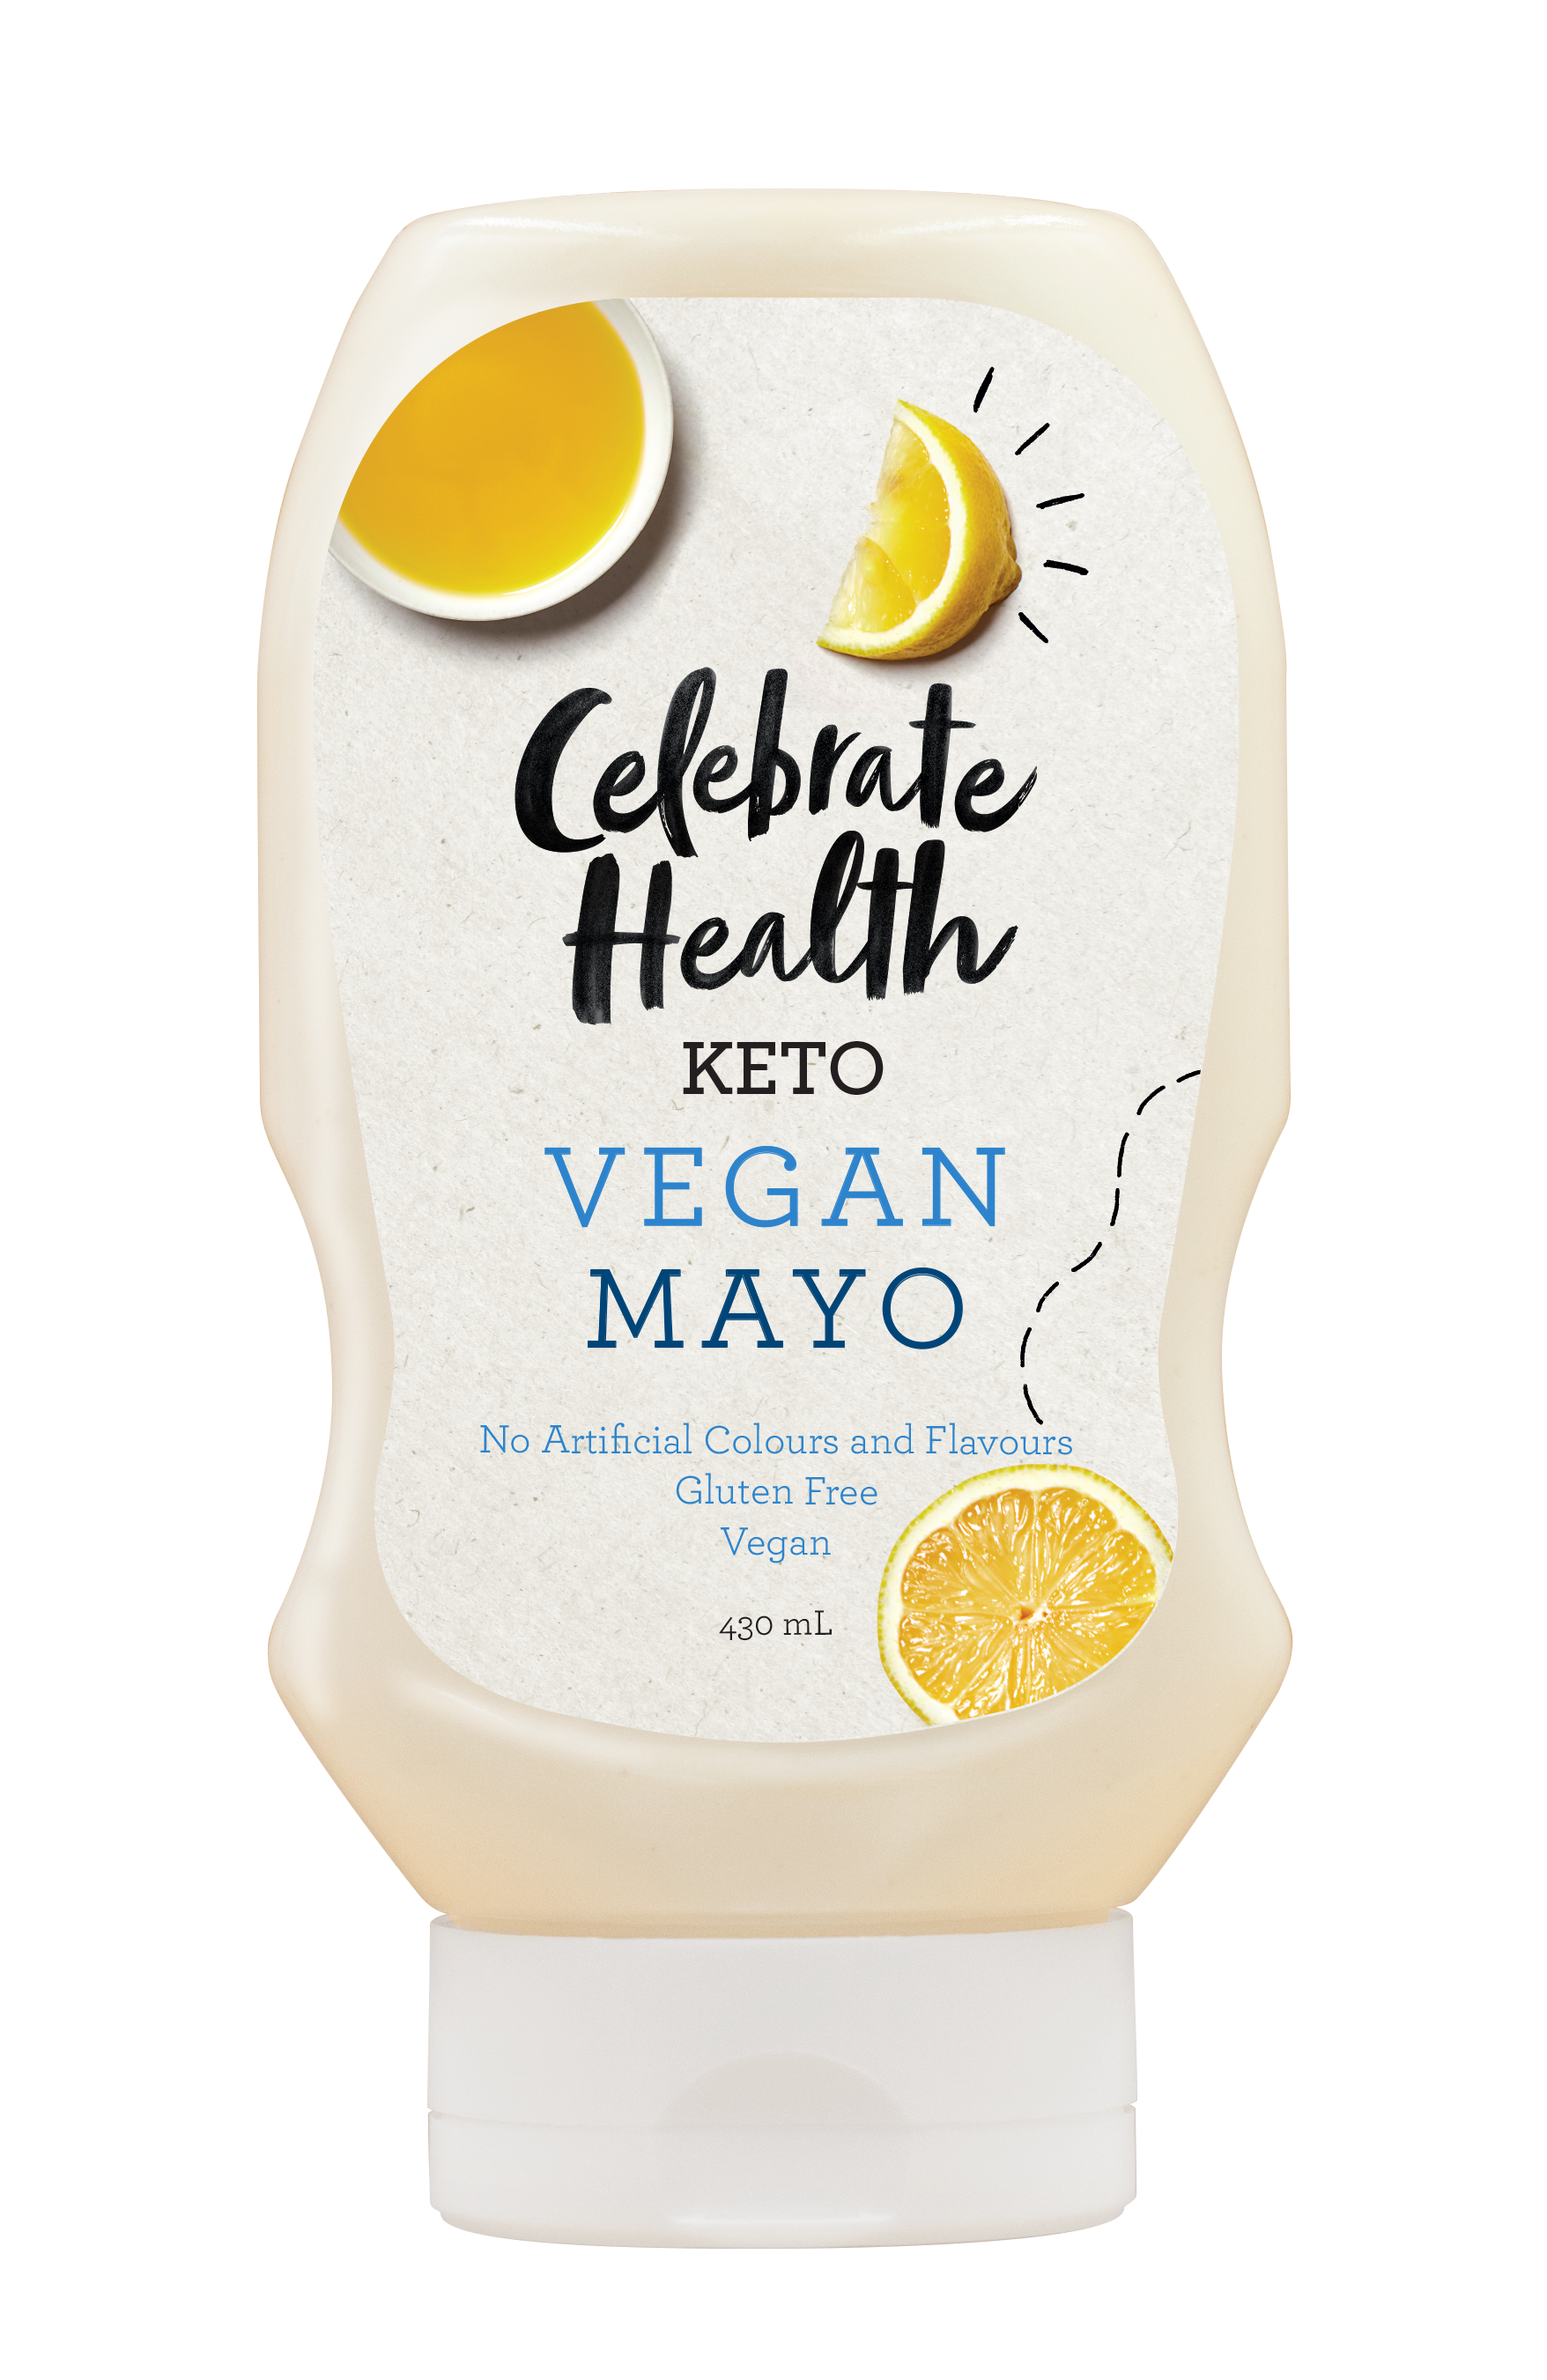 Celebrate Health Vegan Mayo – Keto Image